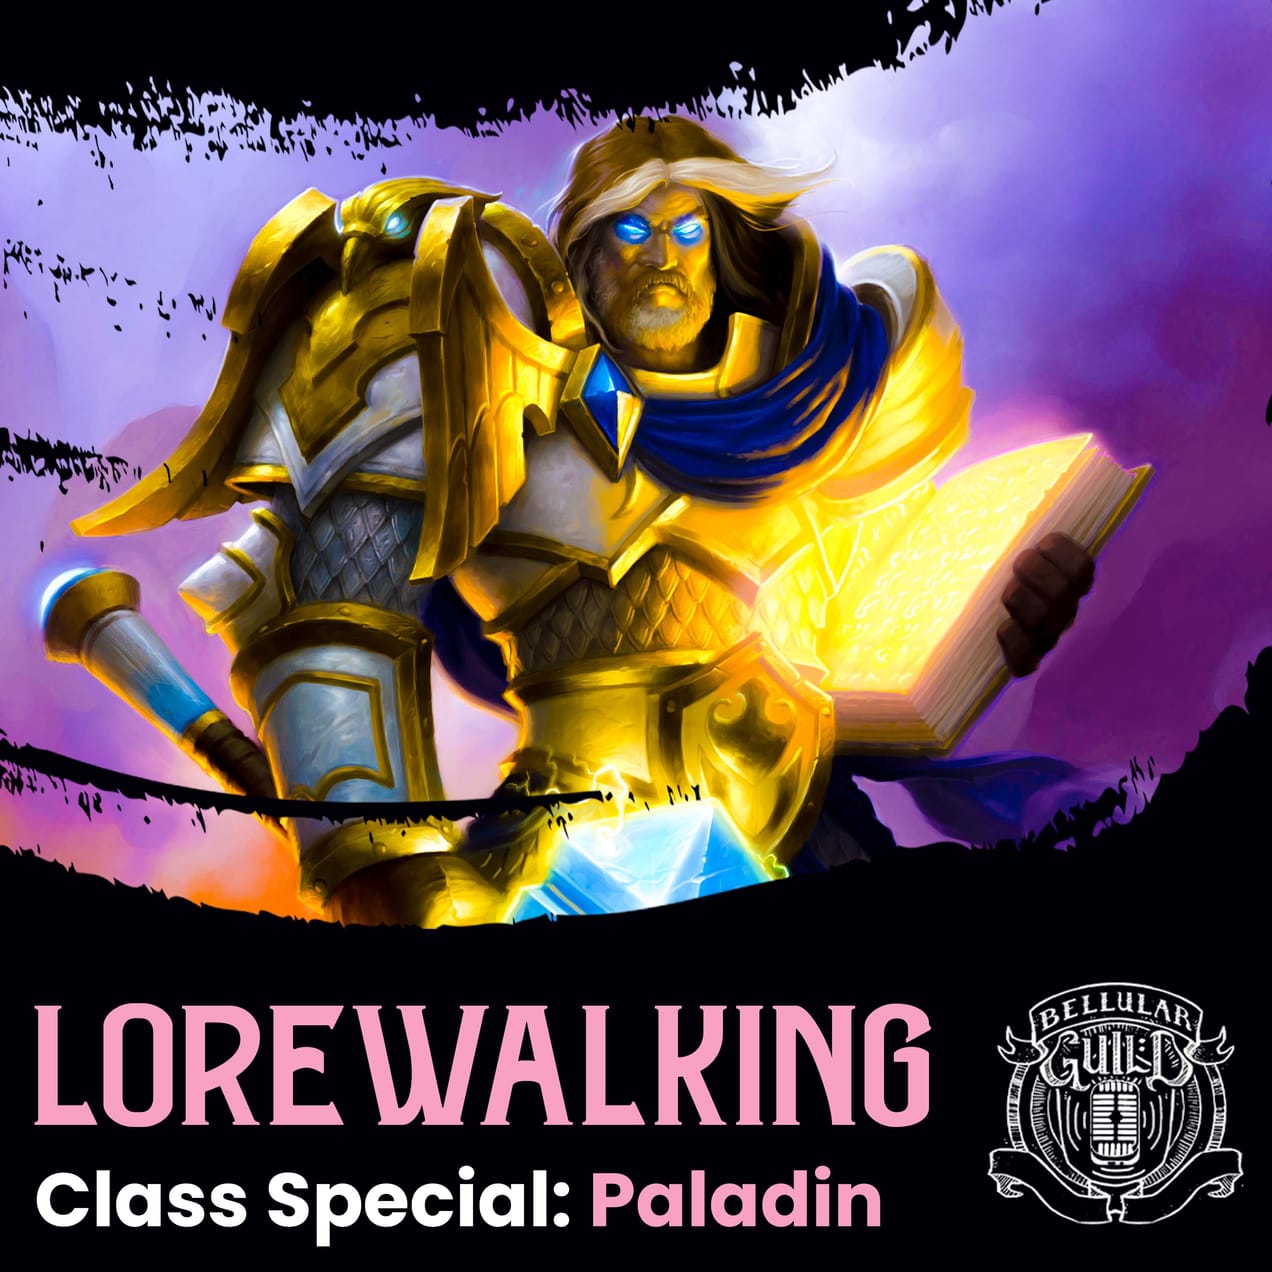 Lorewalking Class Special: Paladin